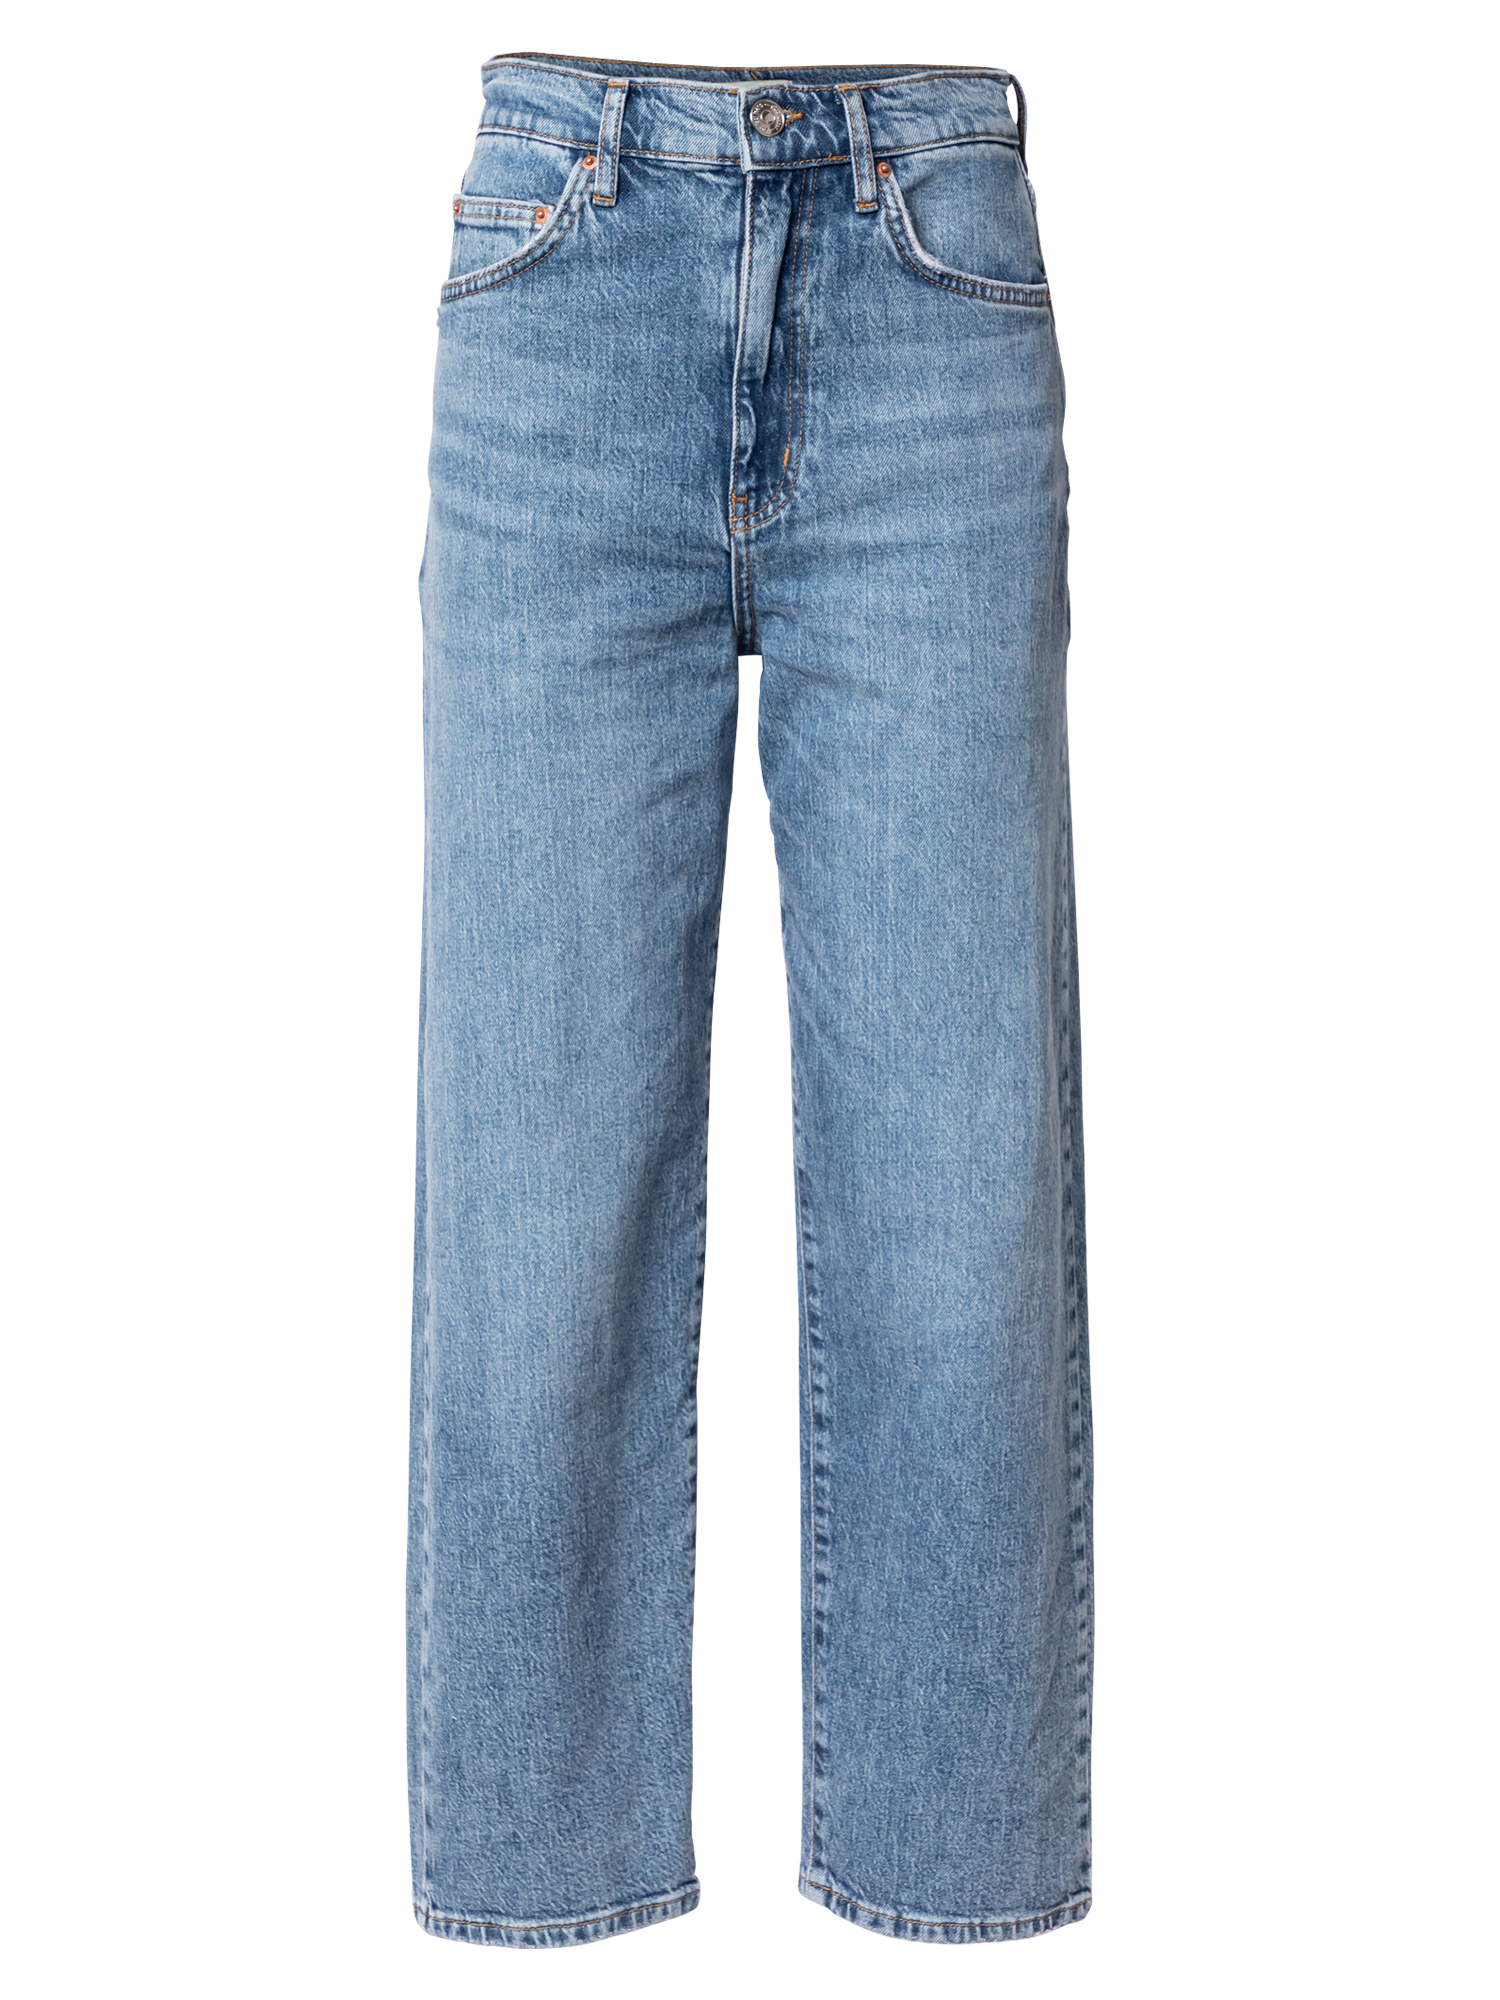 Taglie comode Donna Gina Tricot Jeans Comfy in Blu 